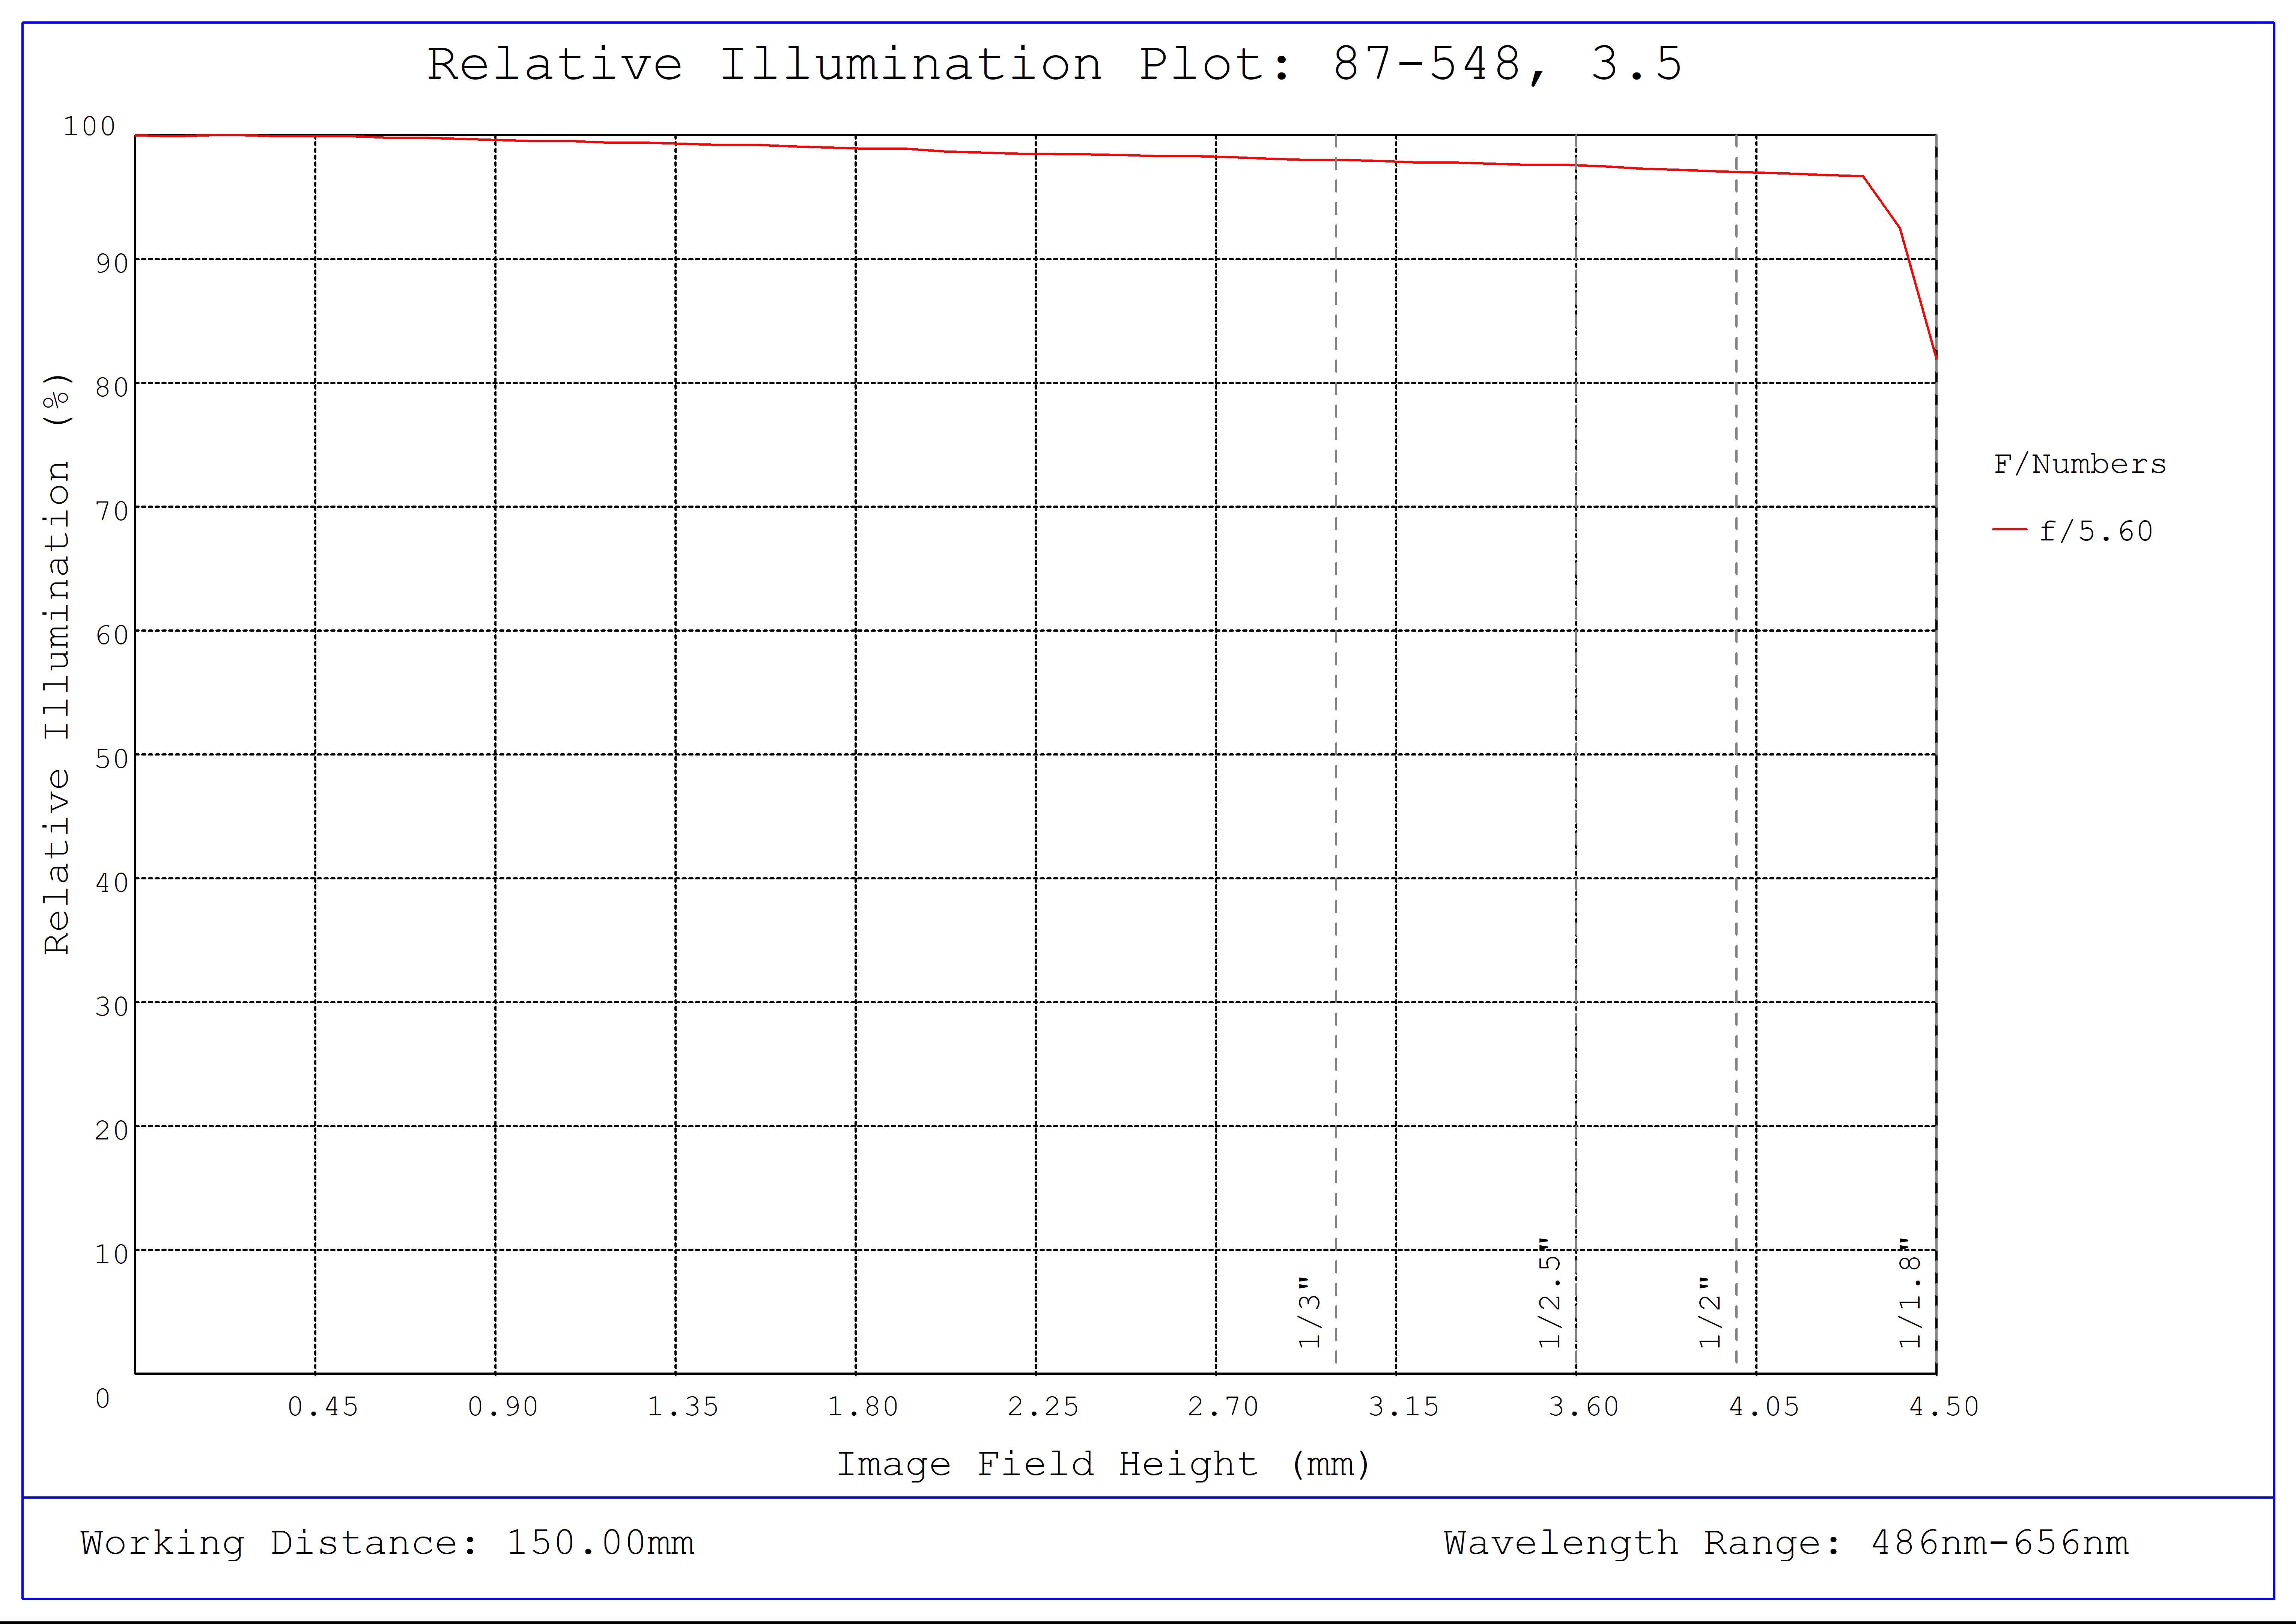 #87-548, 3.5mm, f/5.6 Ci Series Fixed Focal Length Lens, Relative Illumination Plot